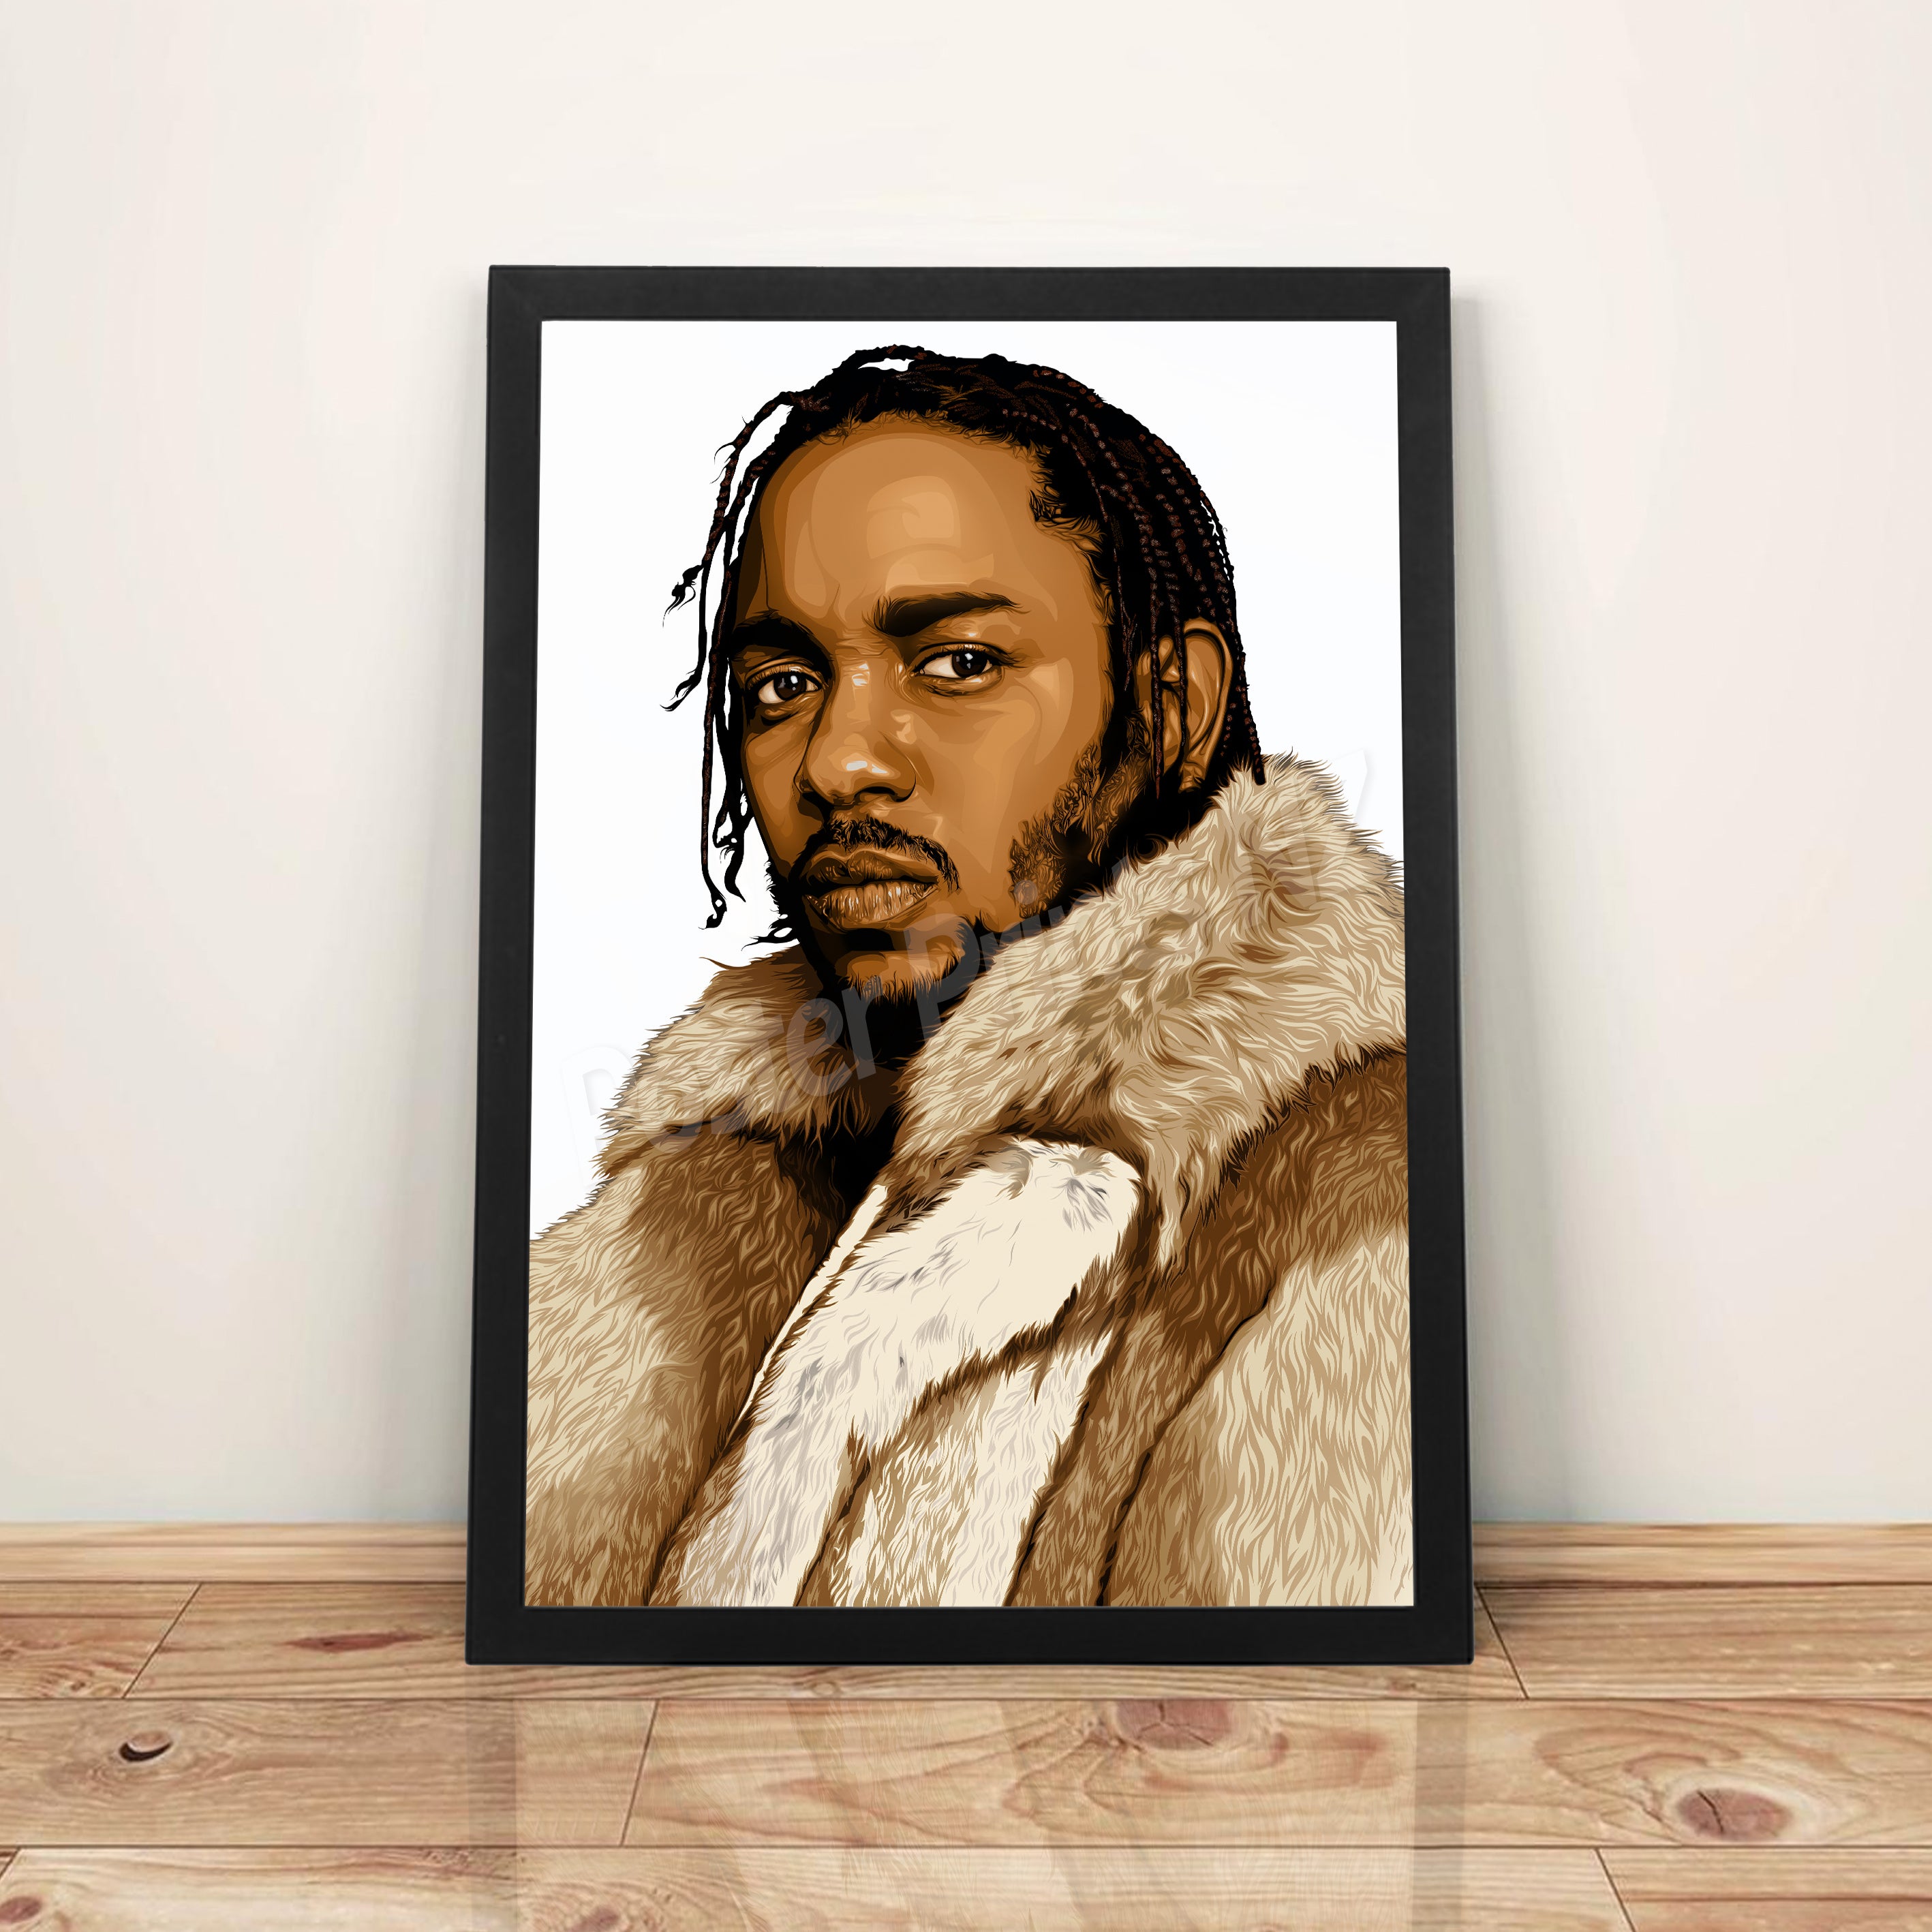 Kendrick Lamar - A3 Framed Digital Art Poster - Poster Prints NZ